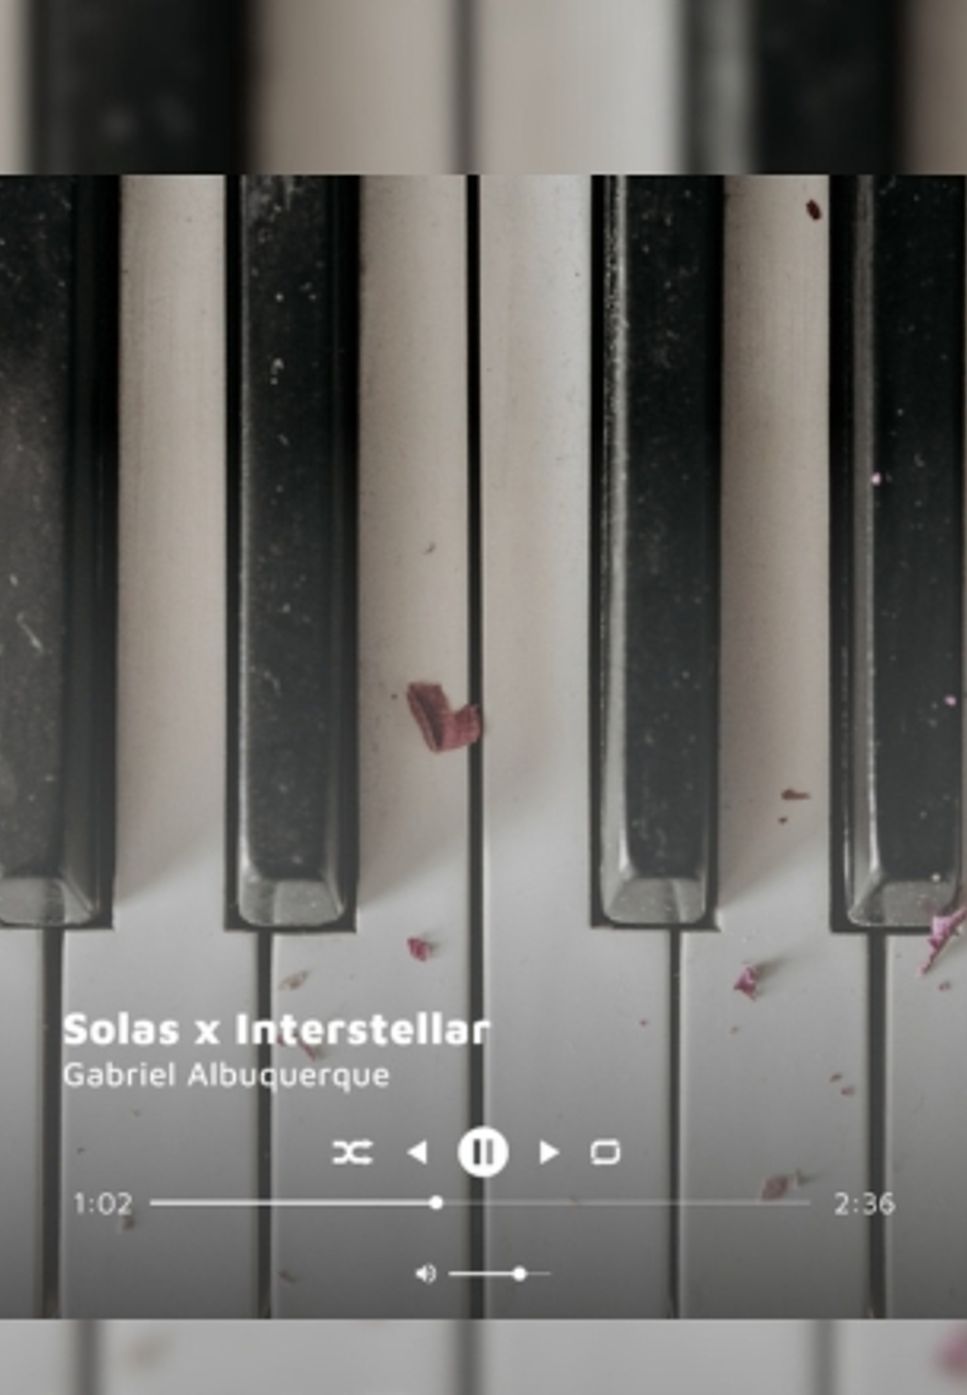 Gabriel Albuquerque - Solas x Interstellar